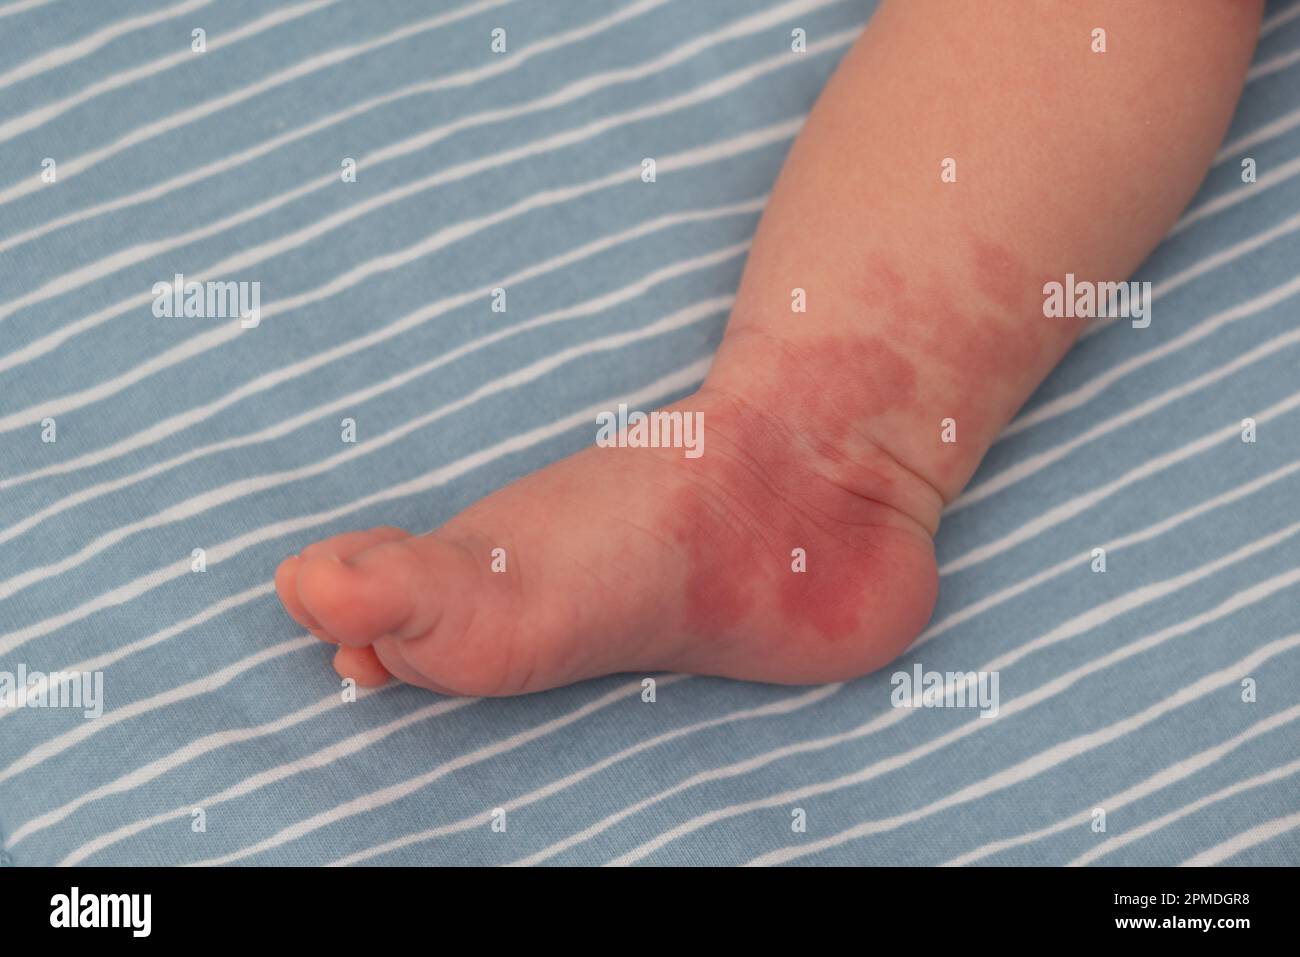 Hemangioma red birthmark on leg of newborn baby Stock Photo